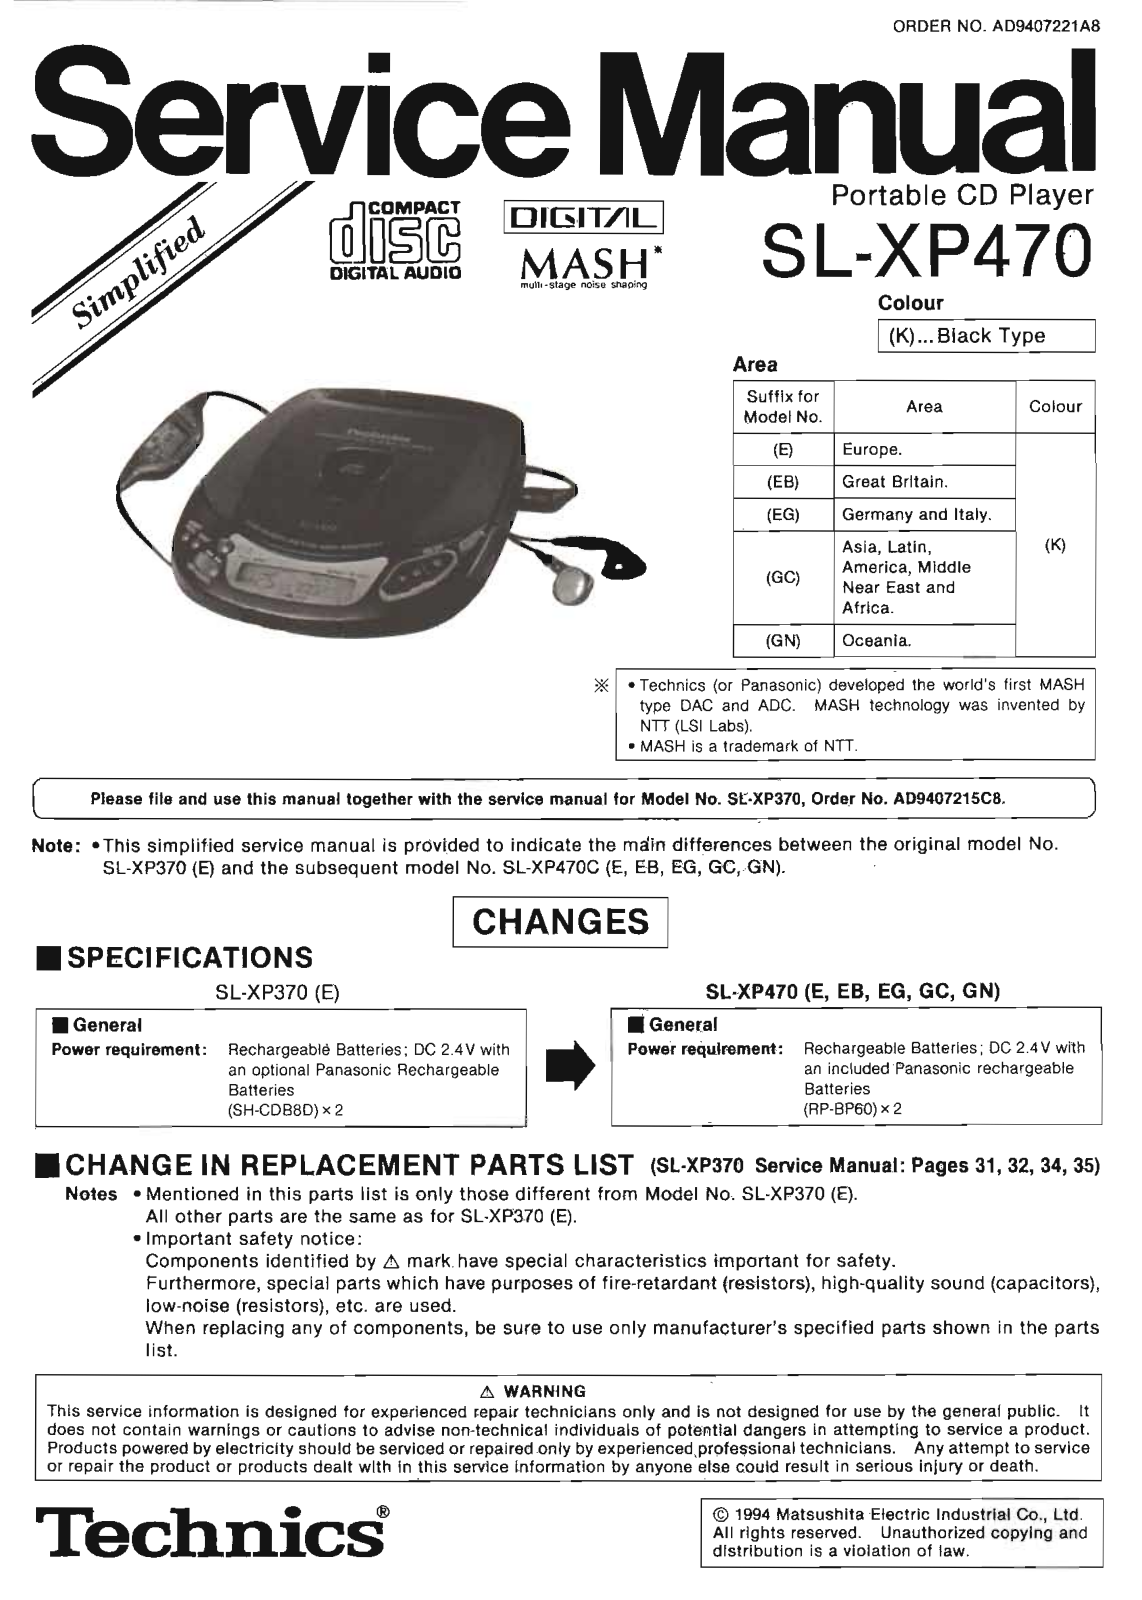 Technics SL-XP-470 Service Manual